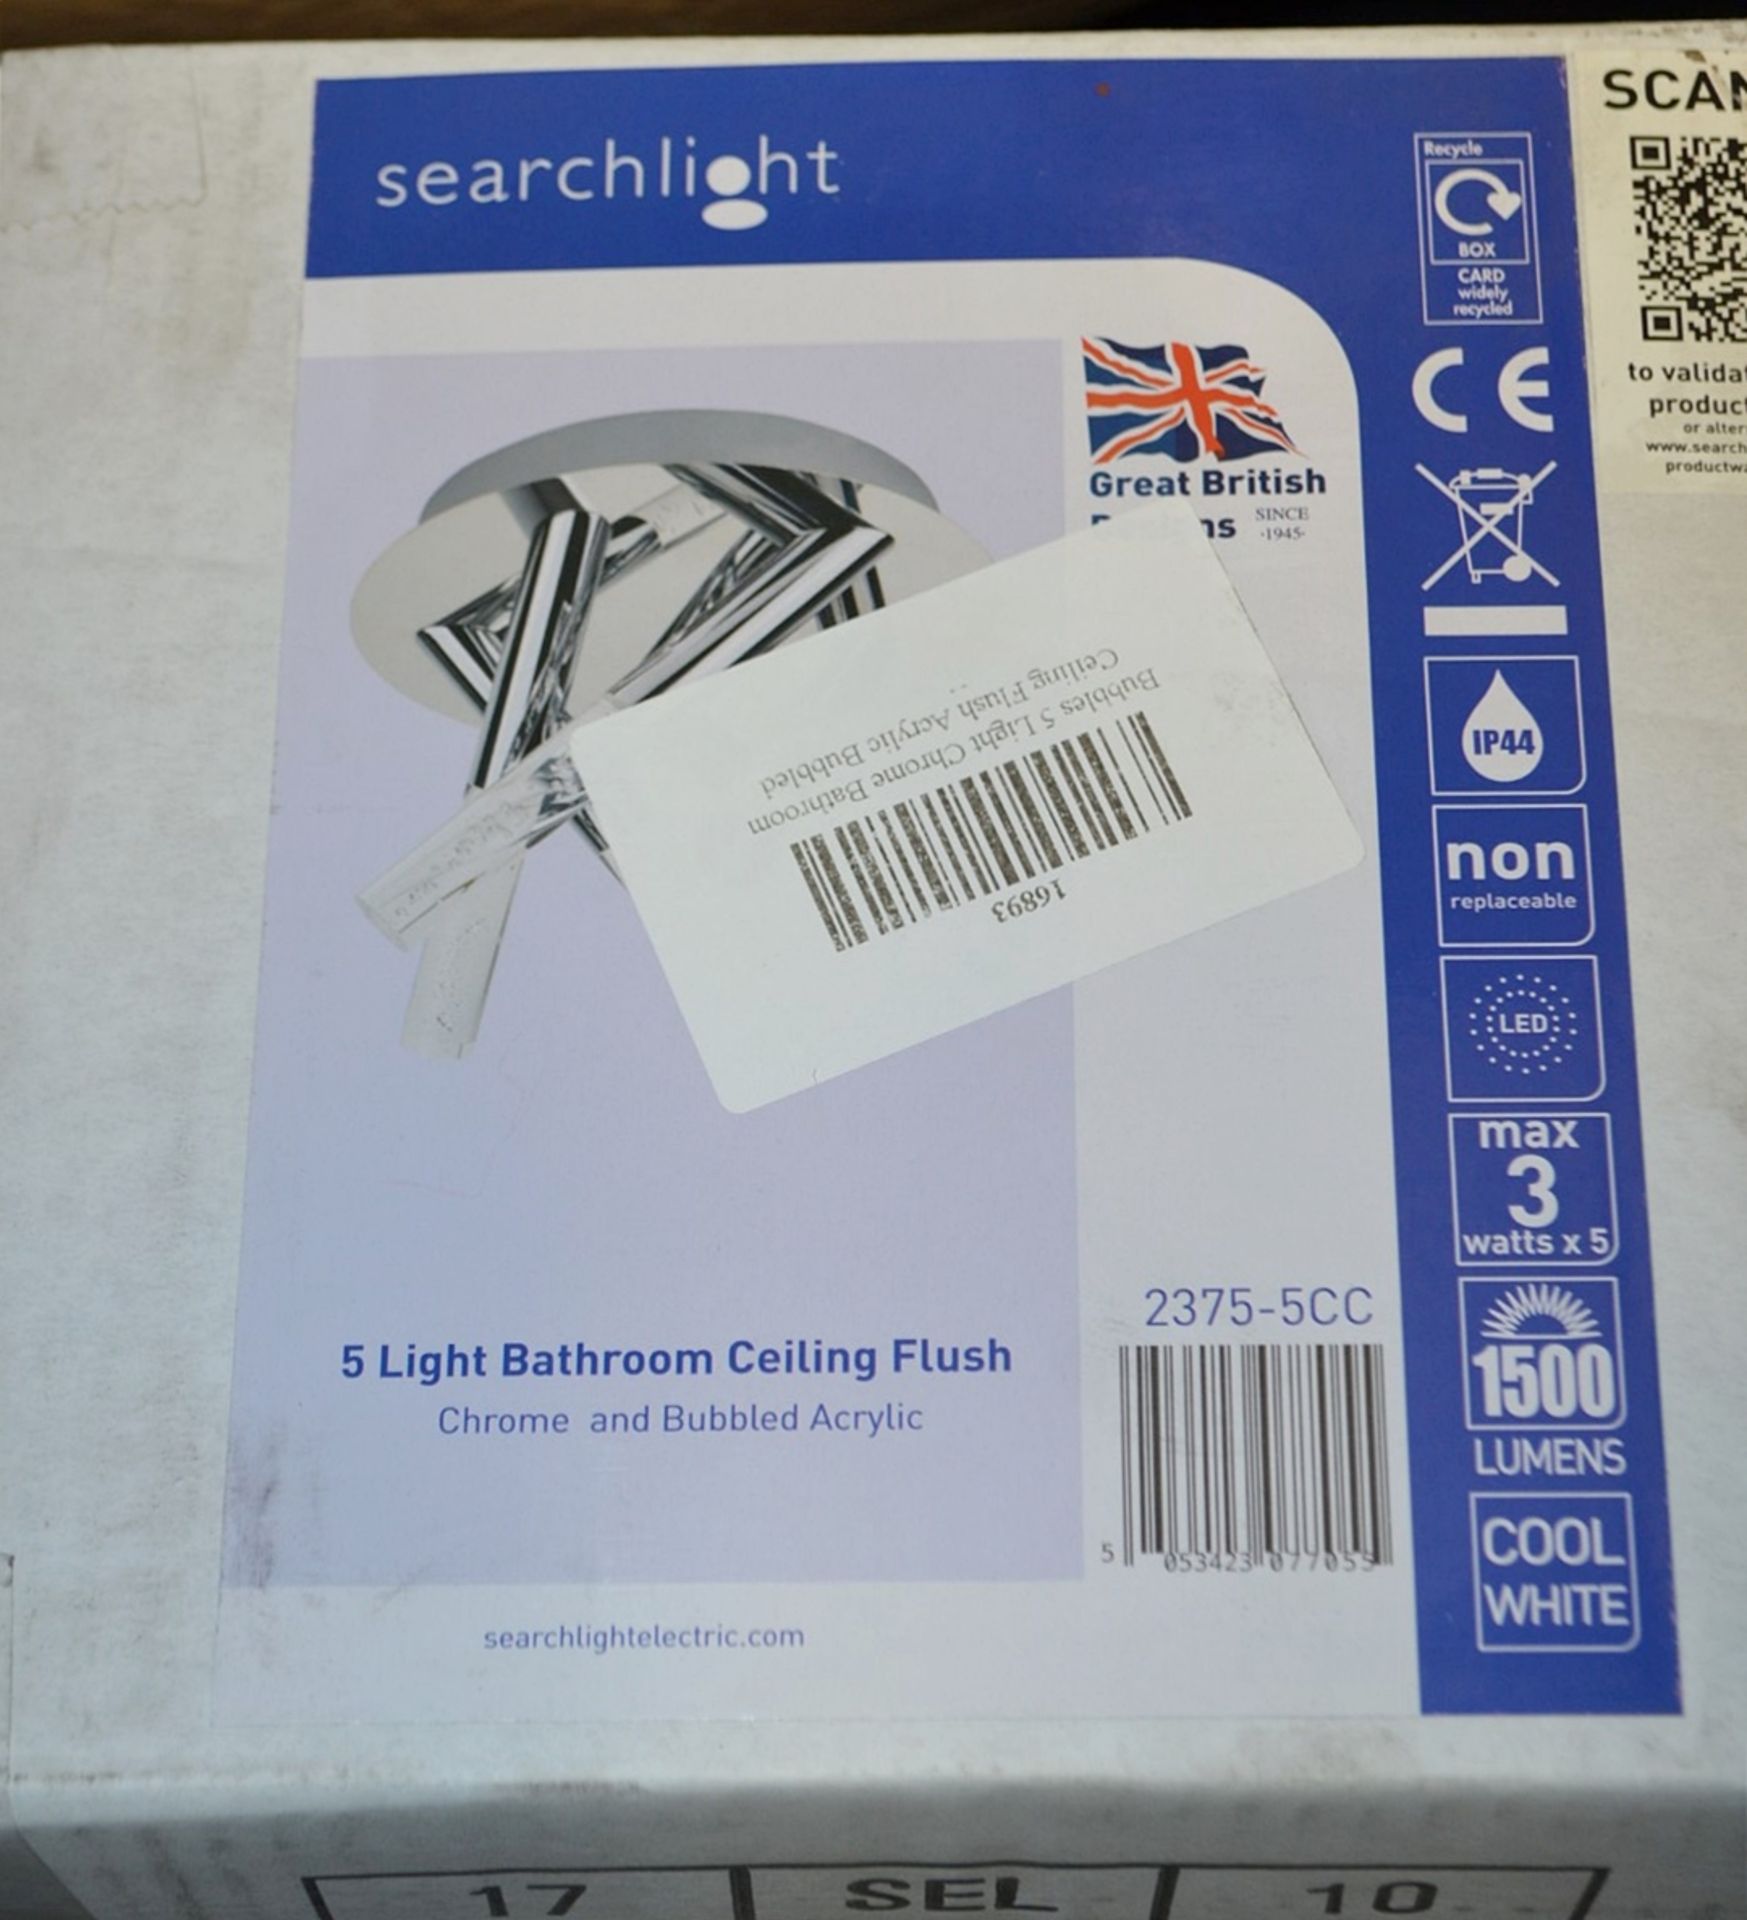 10 x Searchlight 5-Light Bathroom Ceiling Flush with Bubbled Acrylic and Chrome Rods - 2375-5CC - Ne